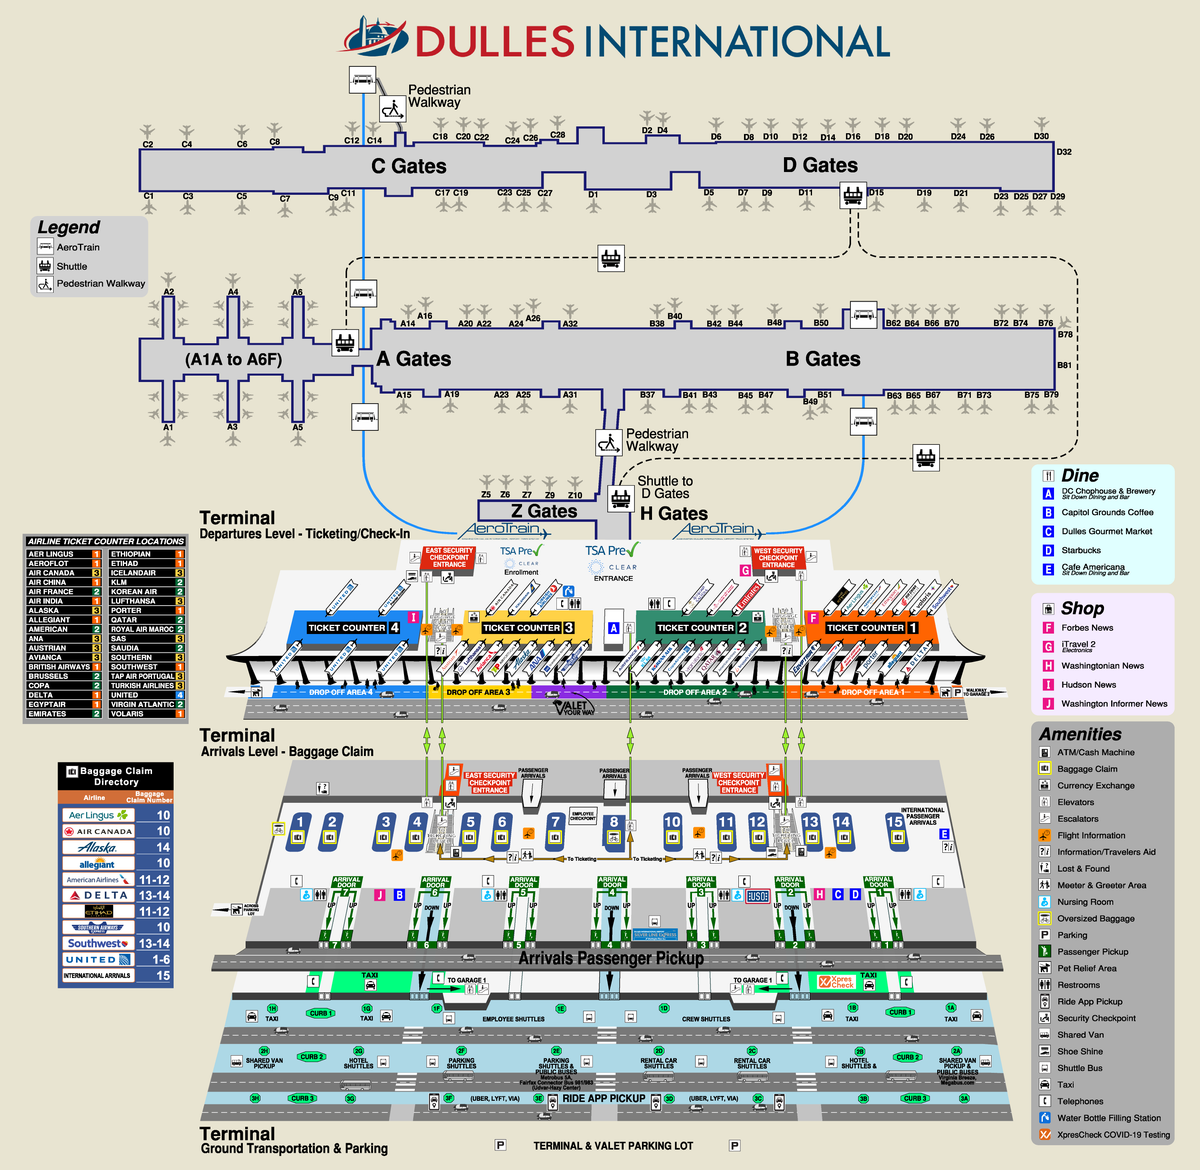 Dulles International terminal map